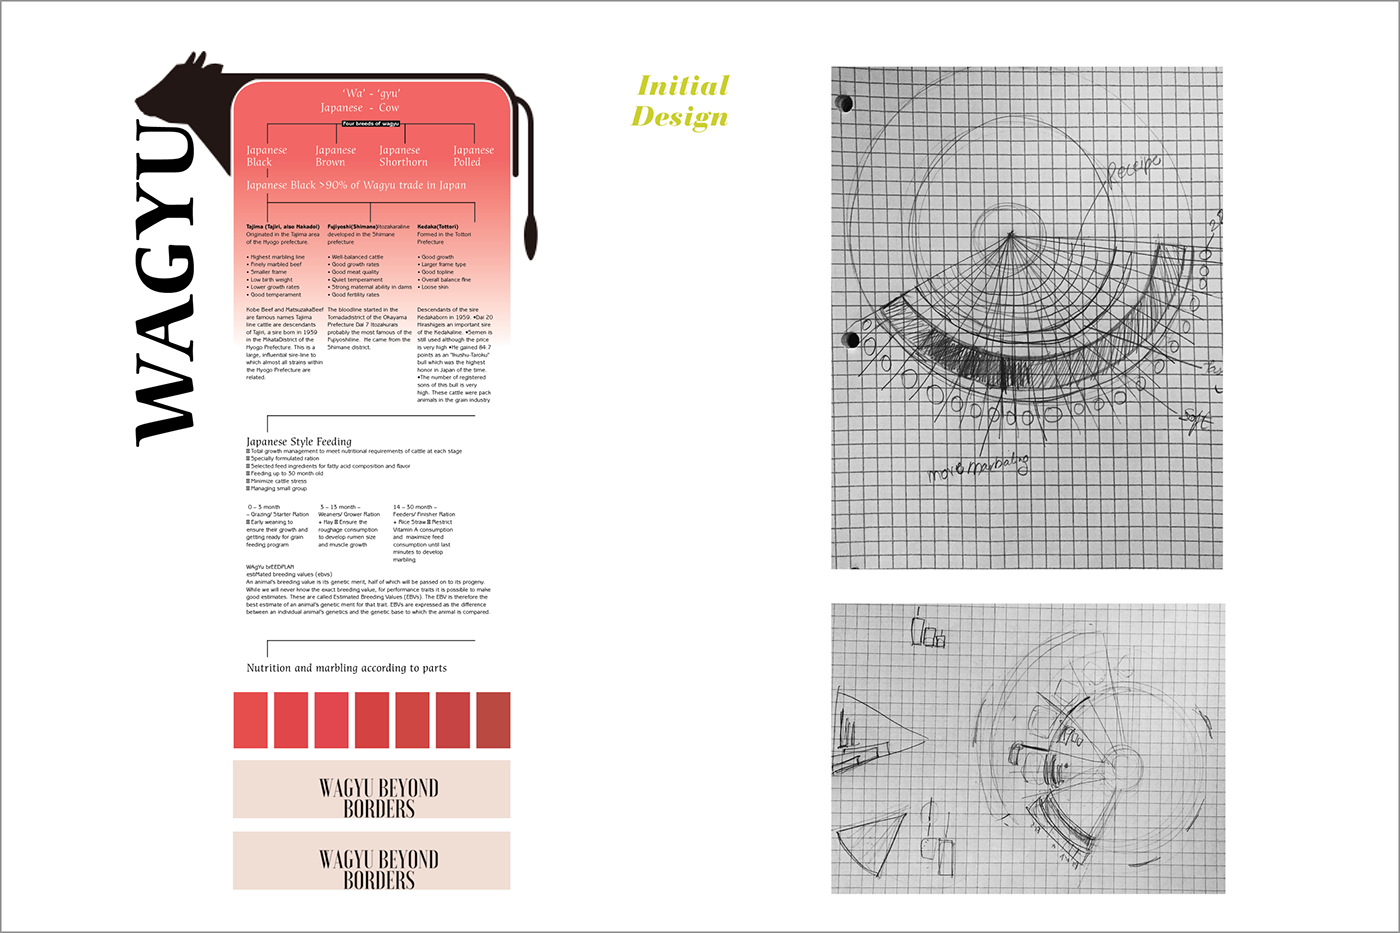 adobeawards graphic design  data visualisation infographic wagyu New York Times newspaper print